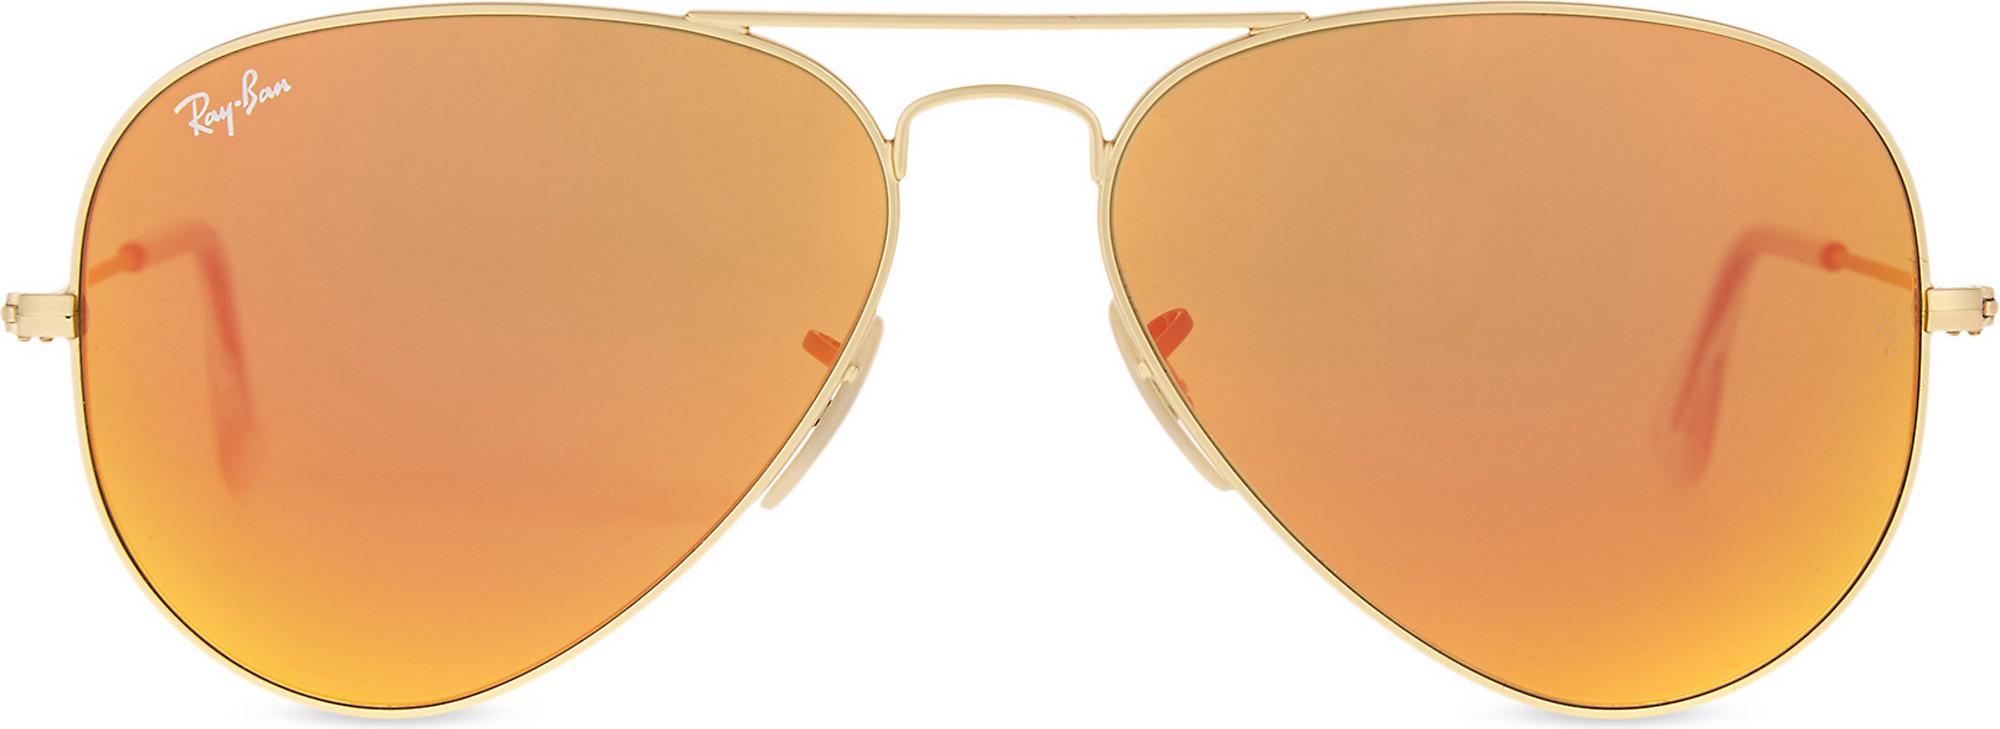 Ray Ban Original Aviator Metal Frame Sunglasses With Orange Lenses Rb3025 58 In Metallic Lyst 